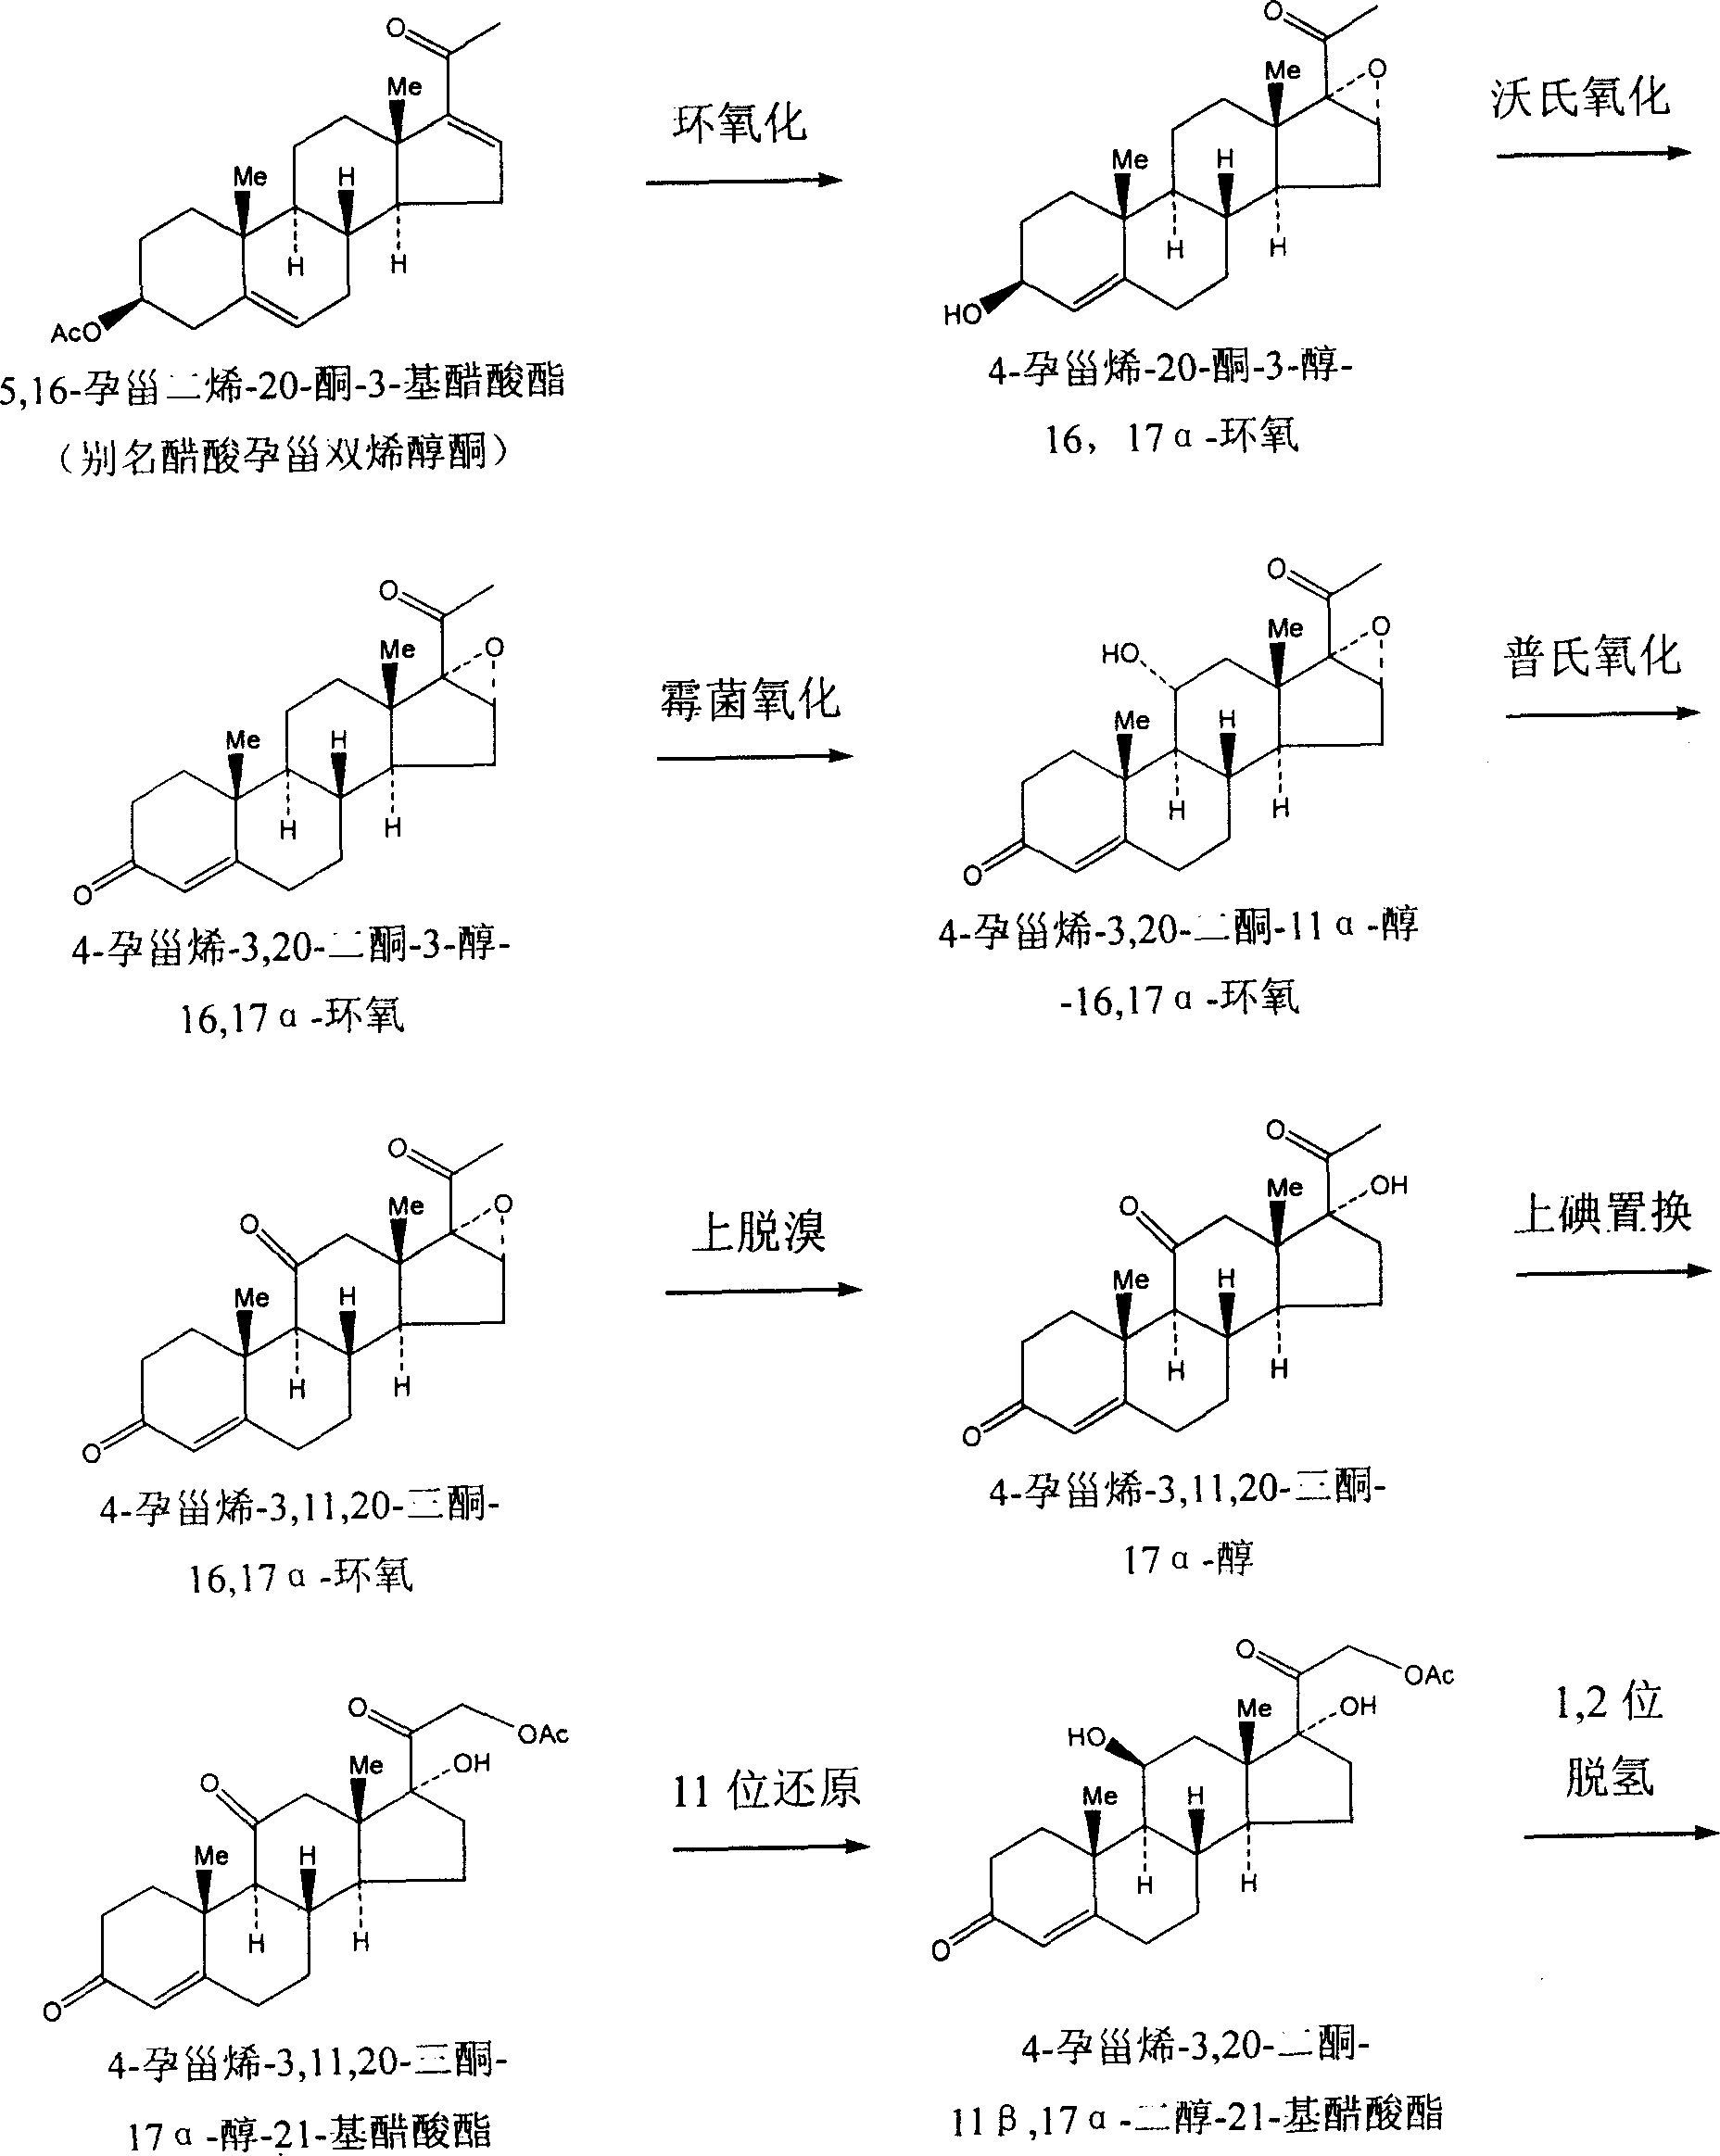 Methylprednisolone chemical synthesis method